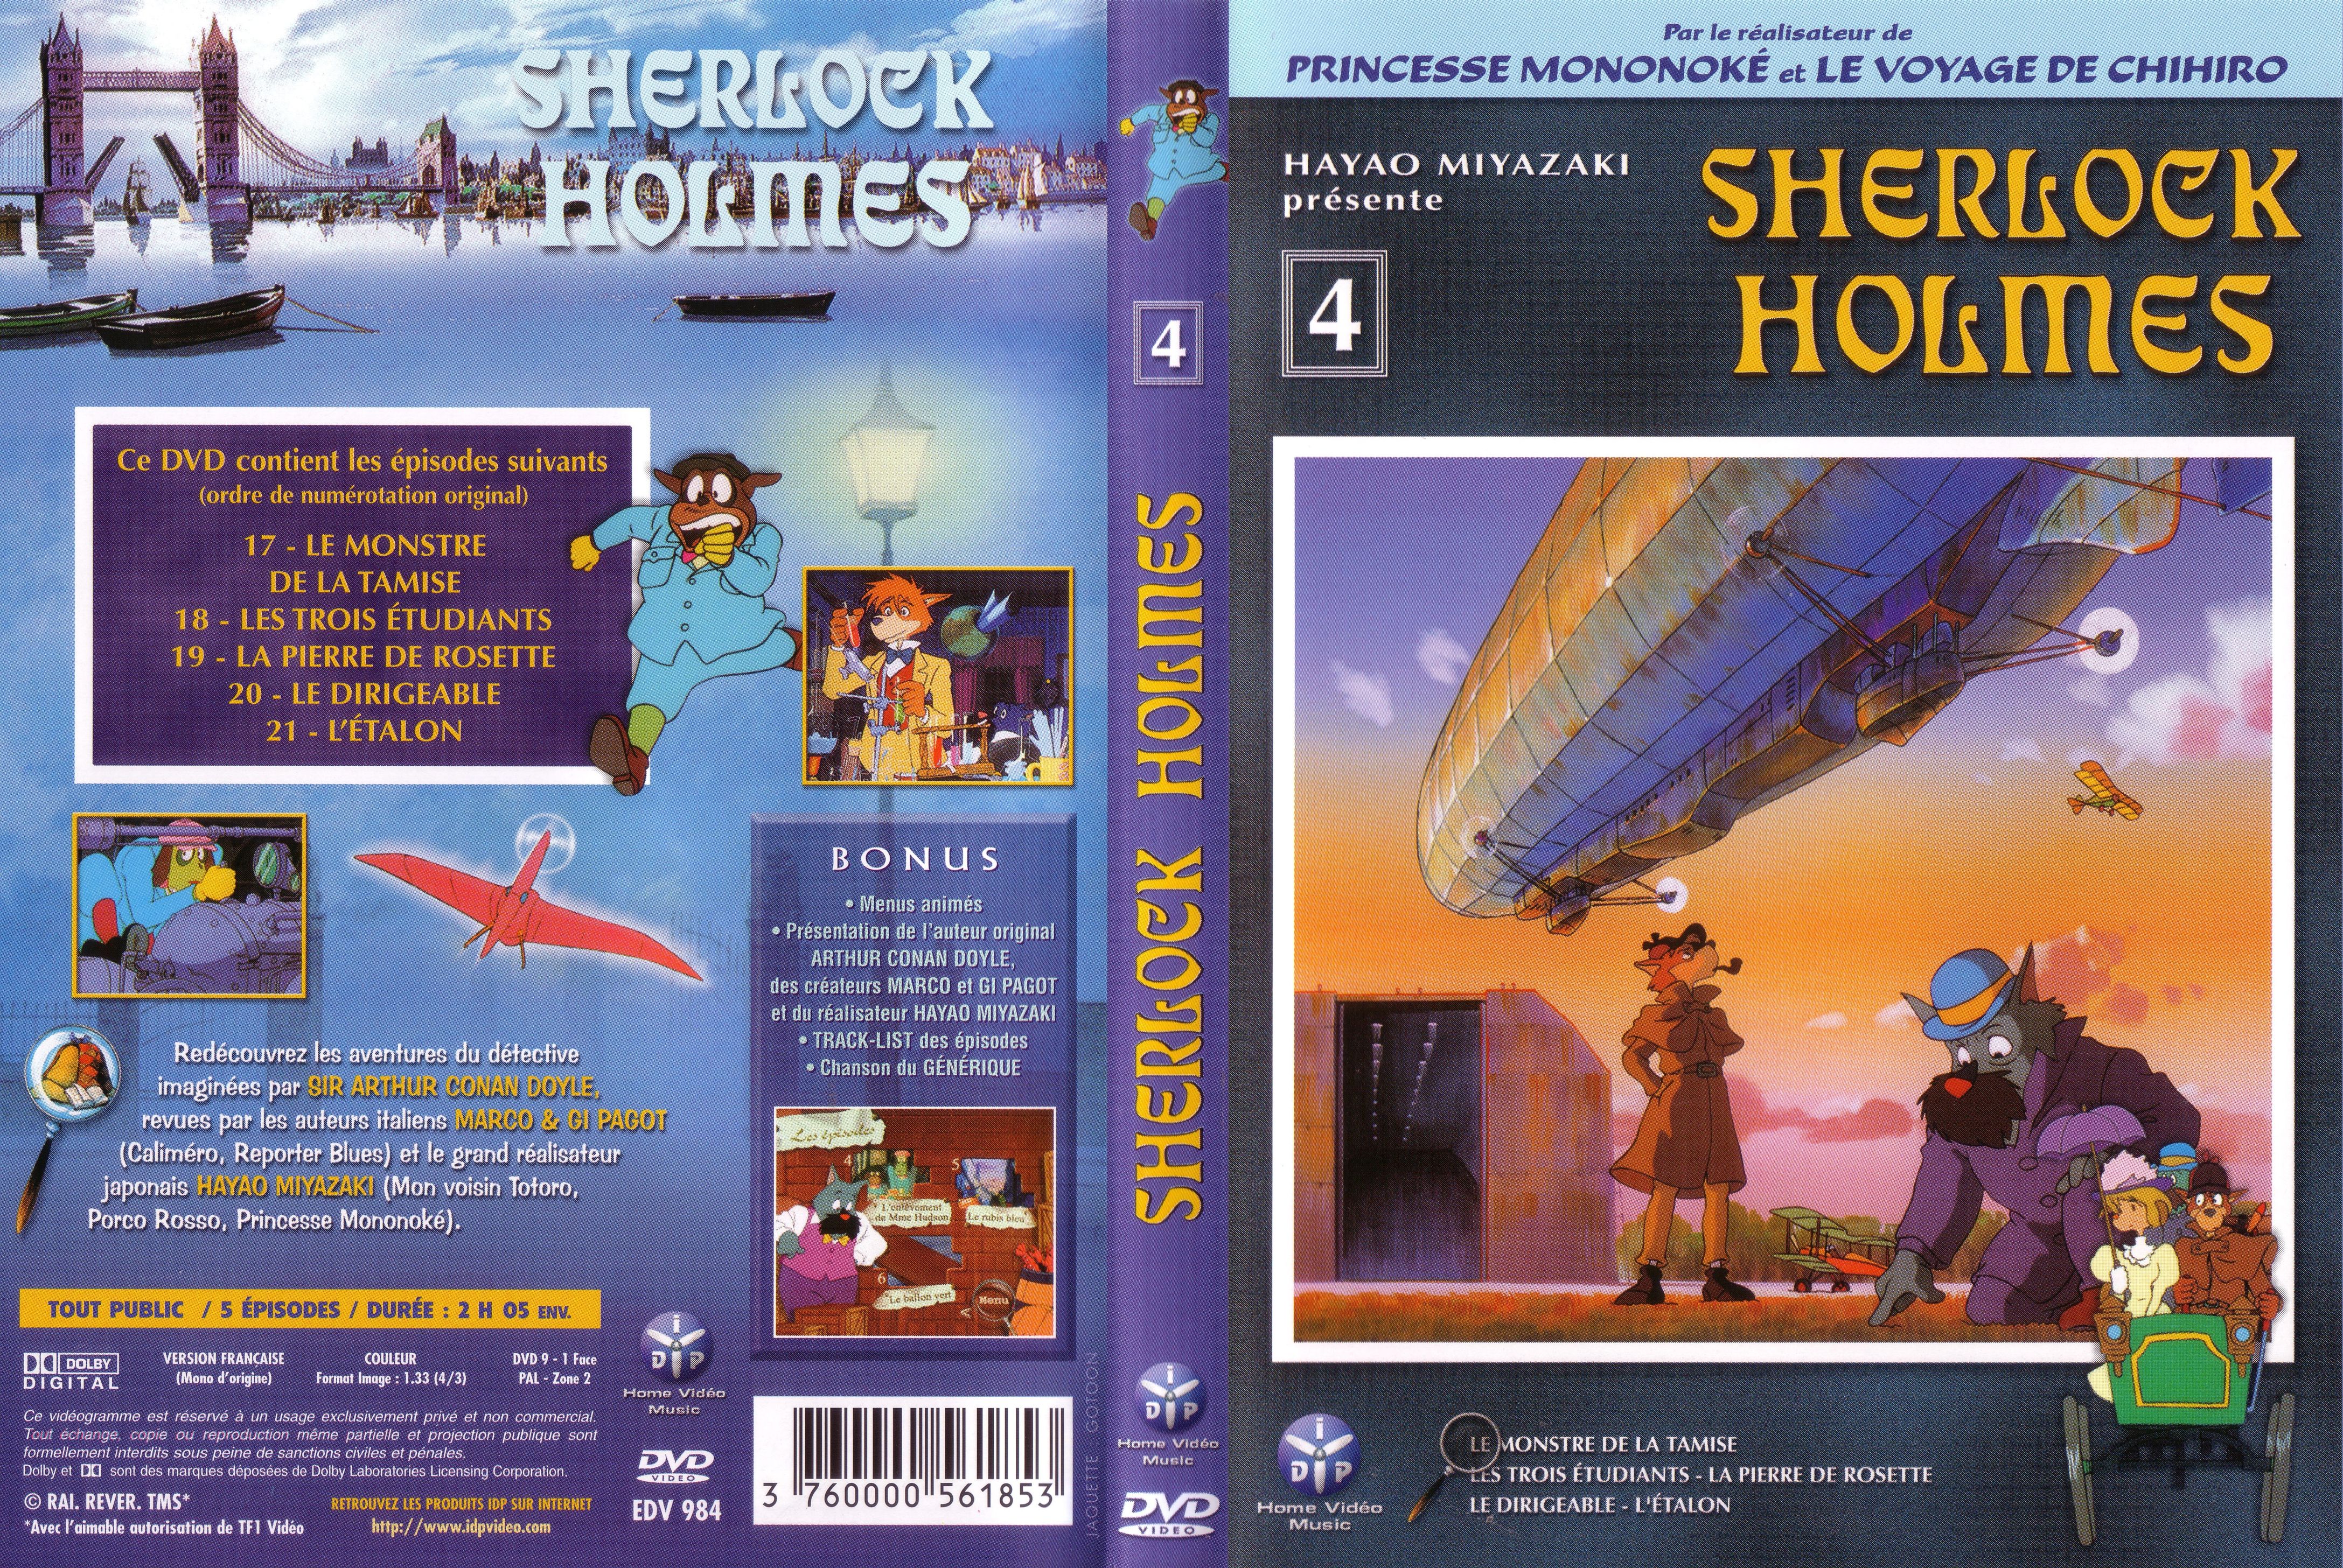 Jaquette DVD Sherlock Holmes vol 4